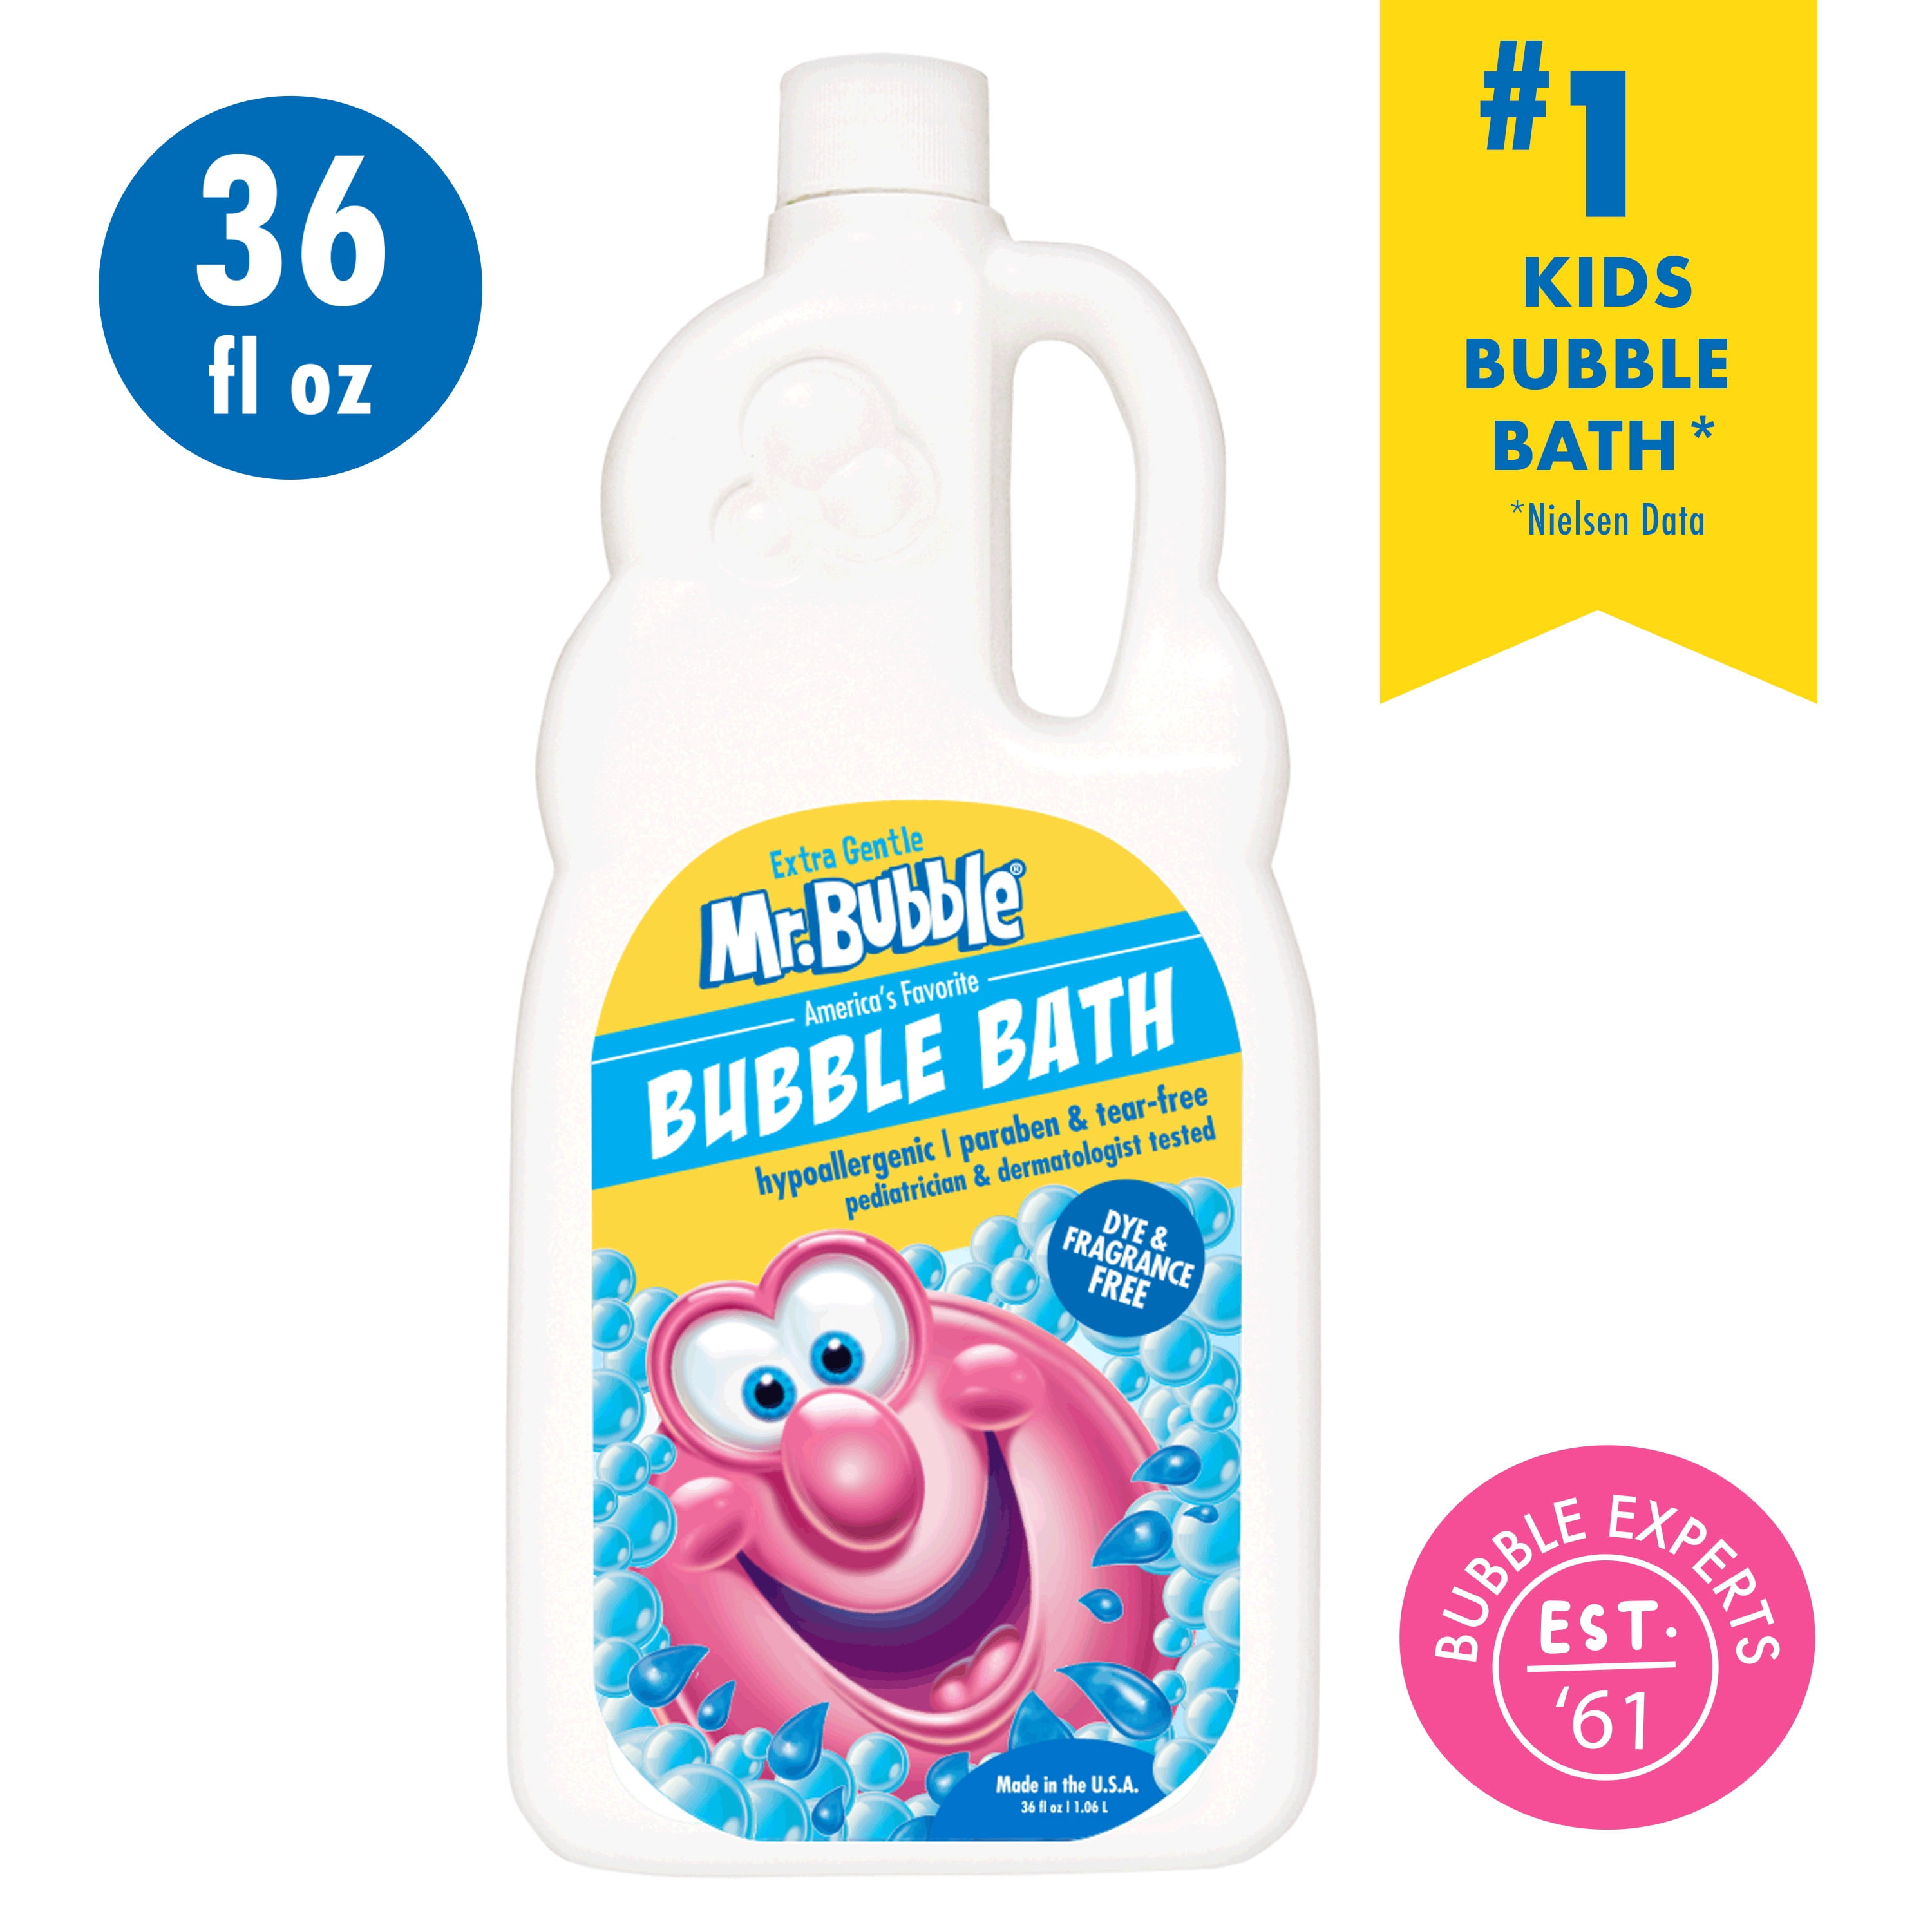 Mr. Bubble Extra Gentle Bubble Bath, Fragrance and Dye Free, 36 oz